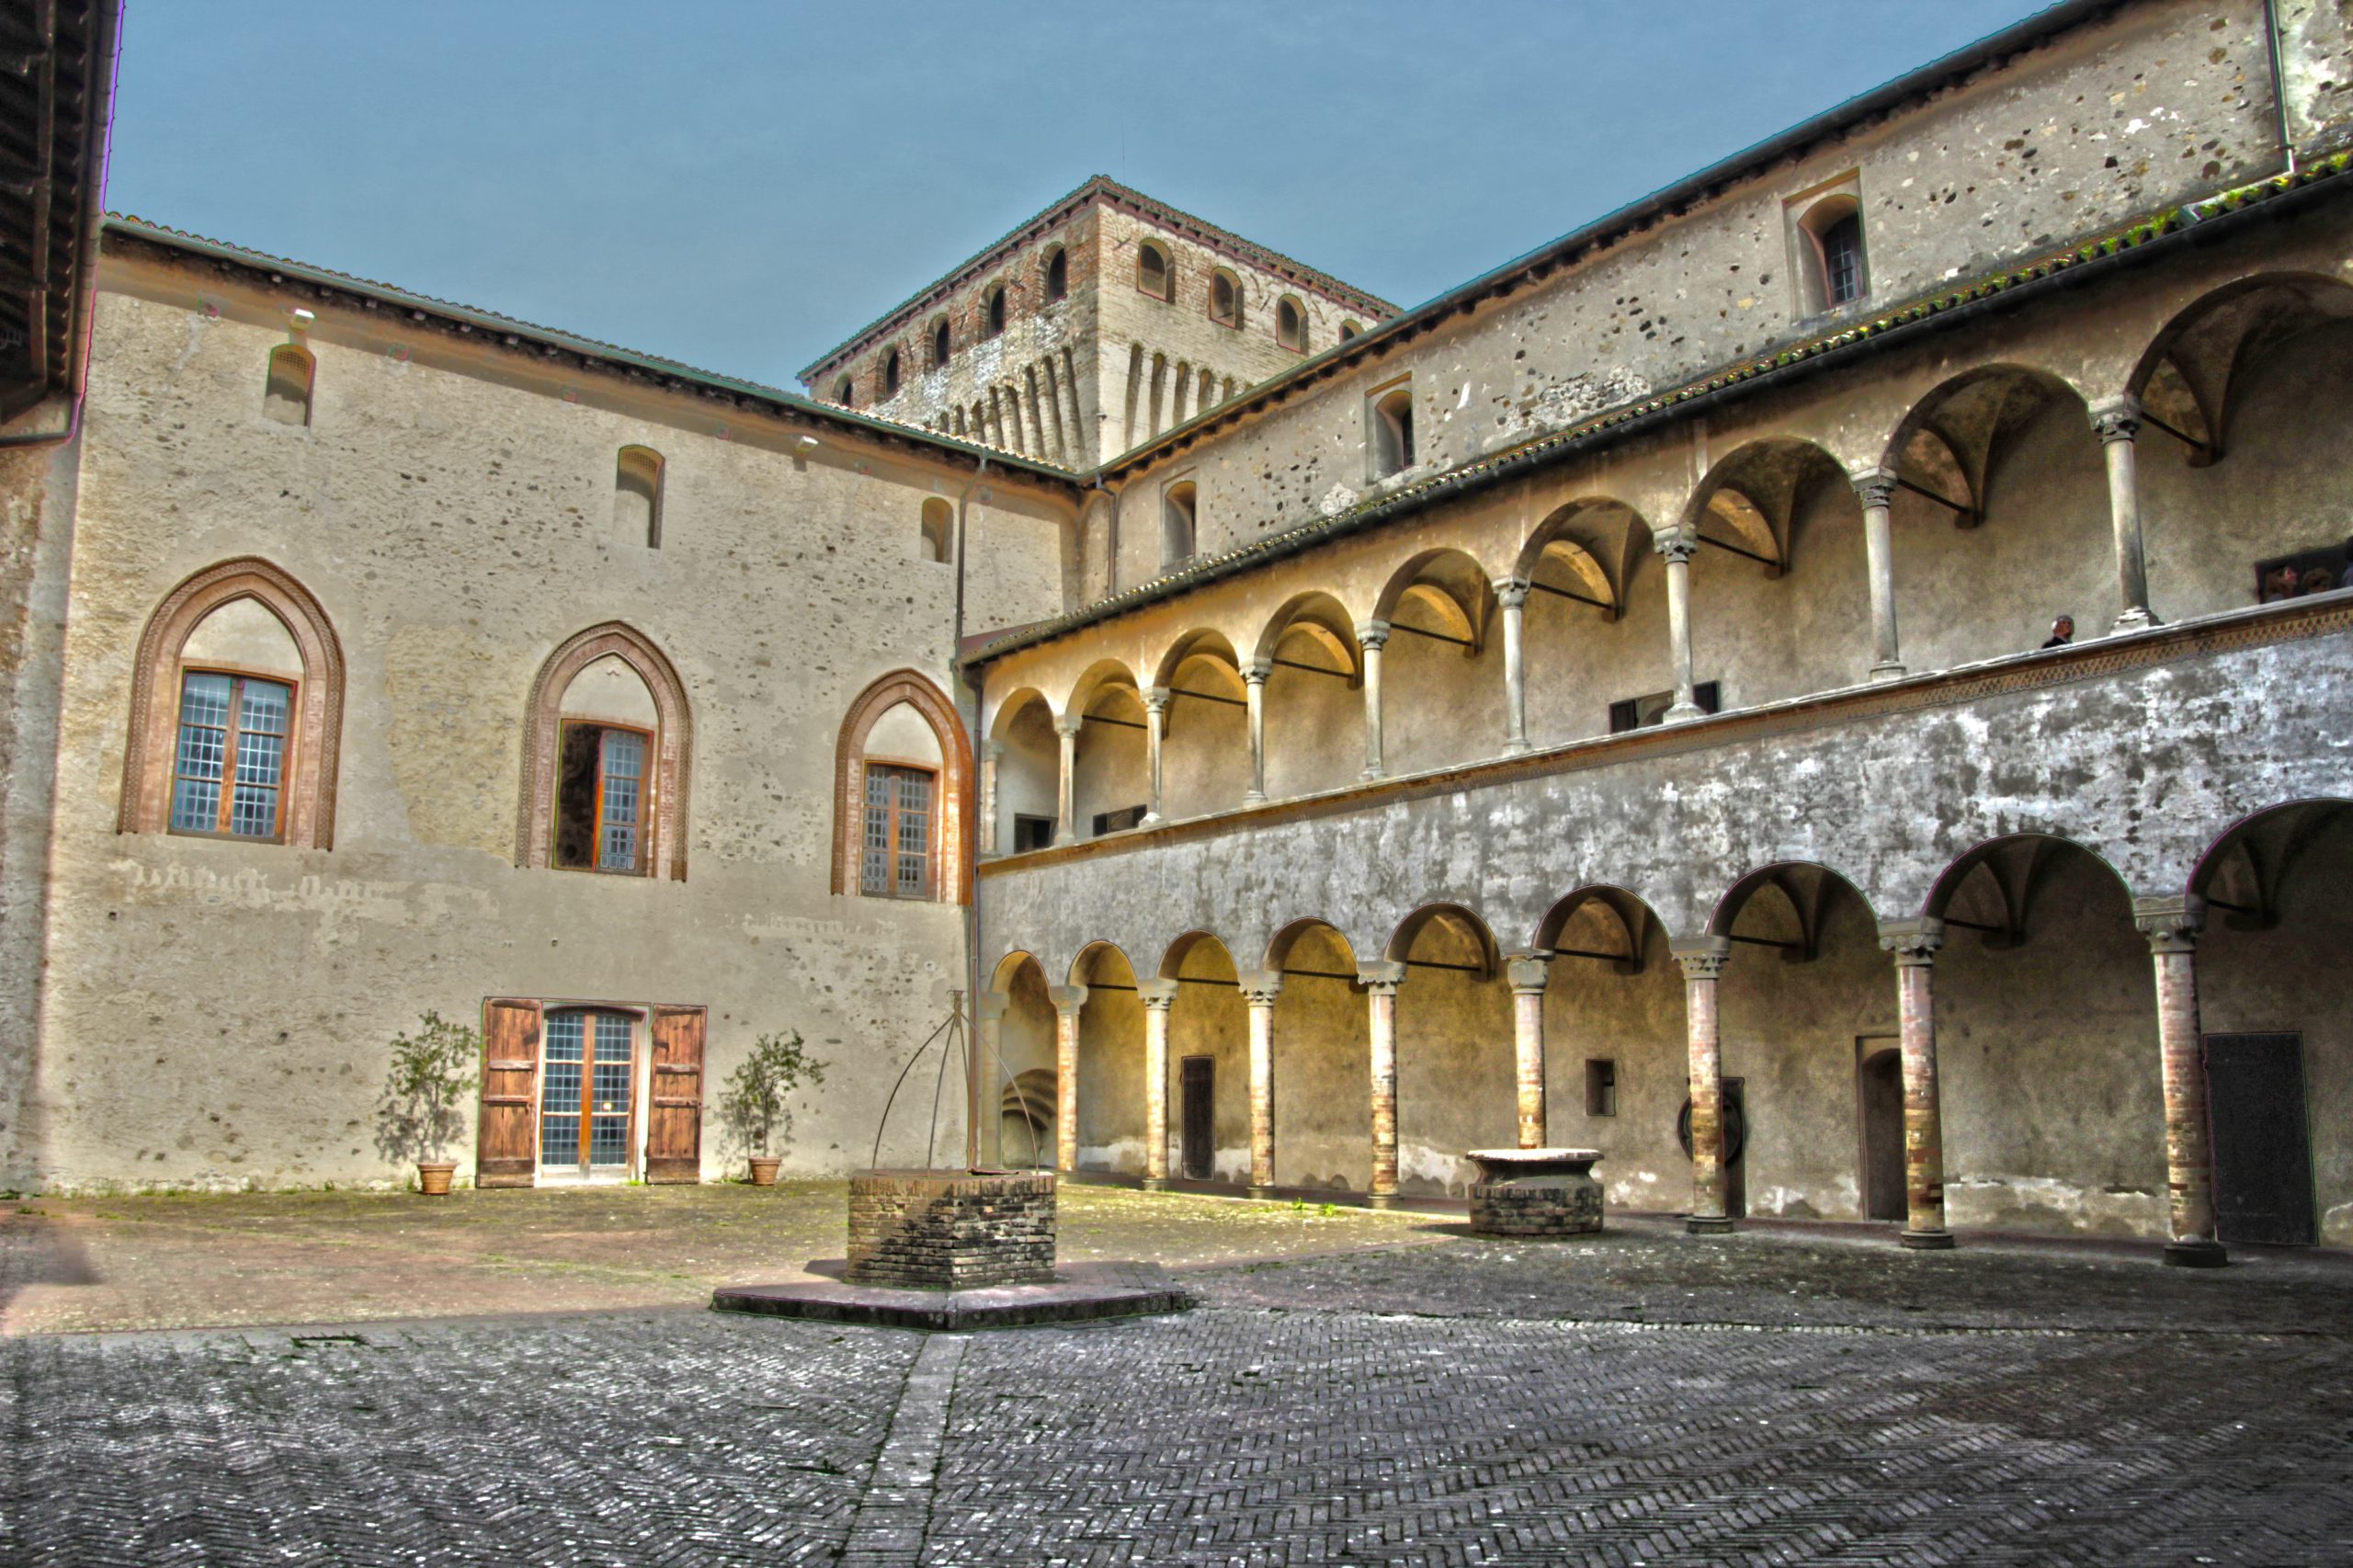 Castle of Torrechiara (Langhirano, PR) - Internal courtyard